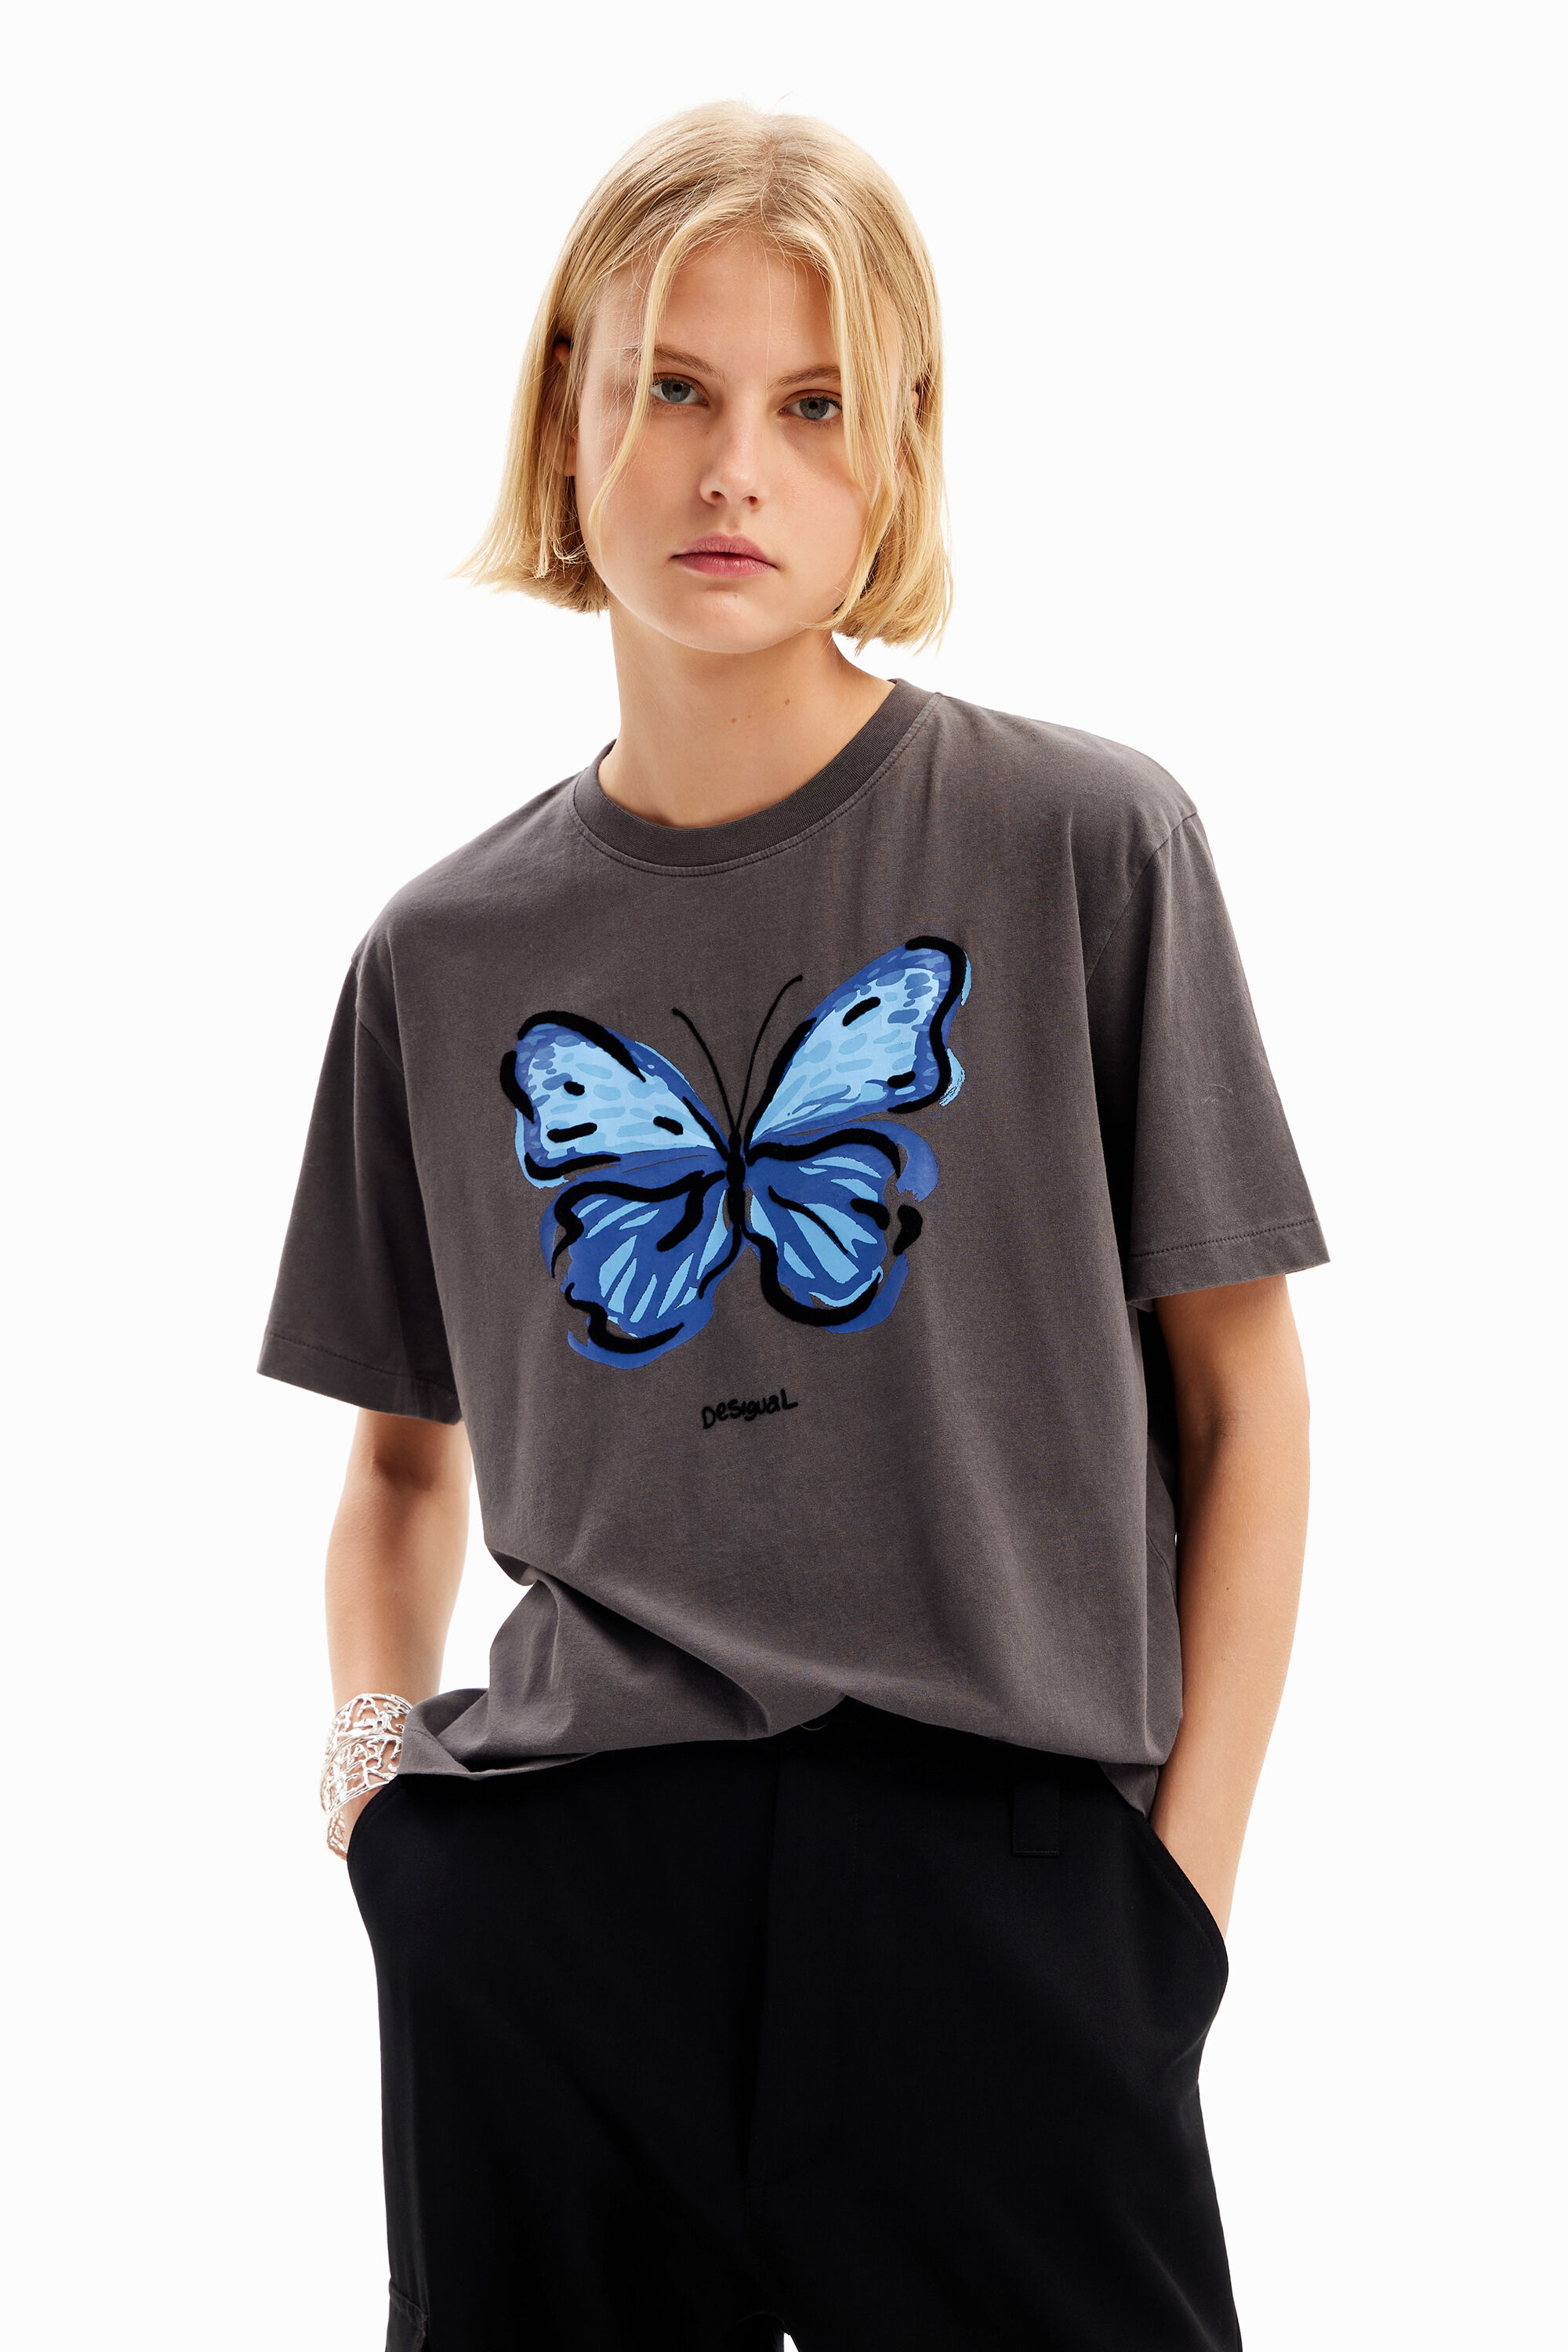 Desigual Butterfly illustration T-shirt